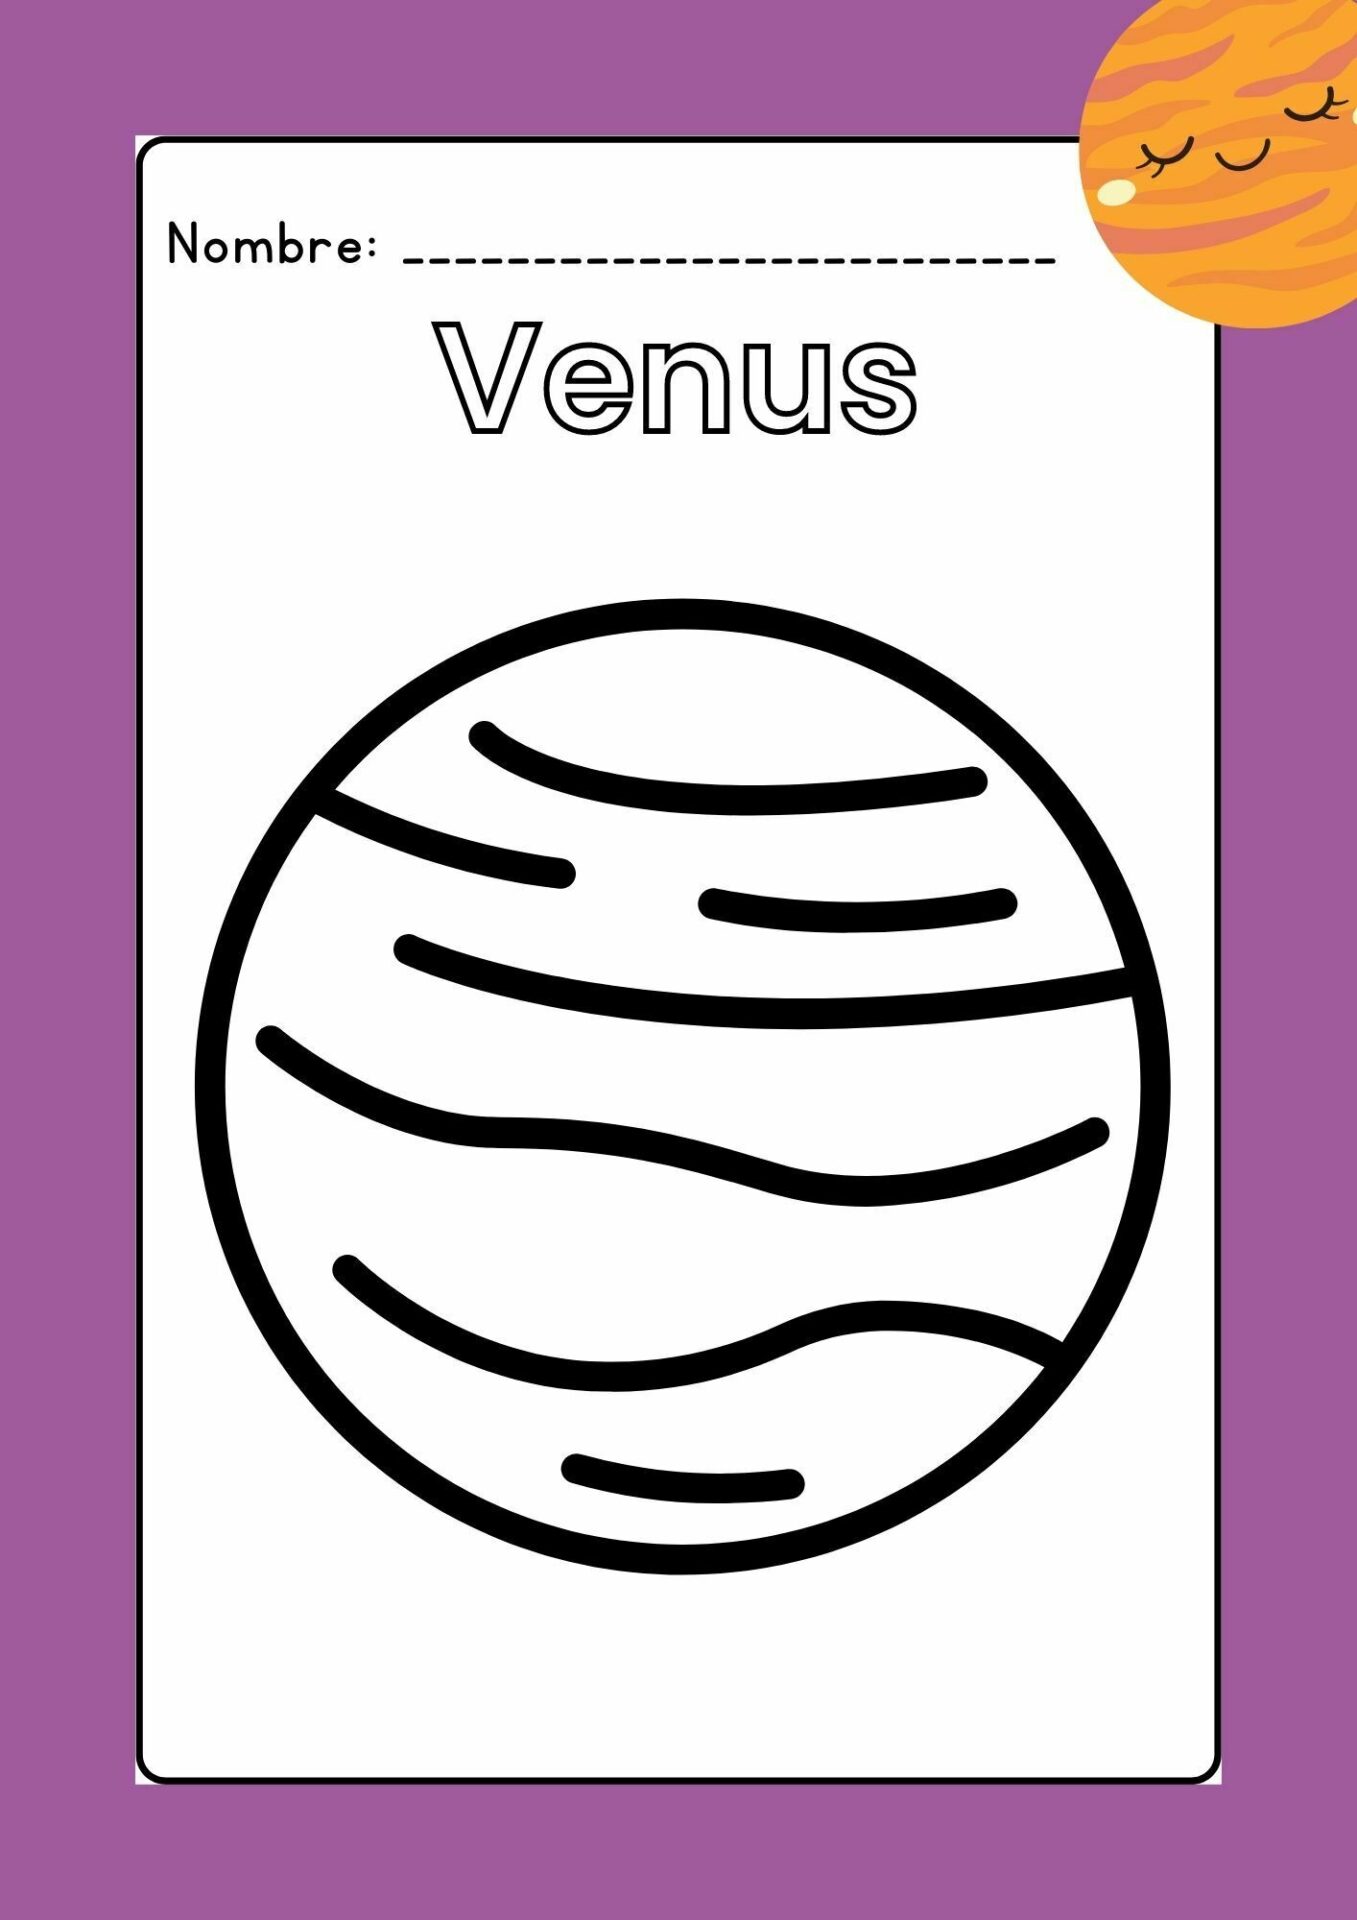 Imagen Venus